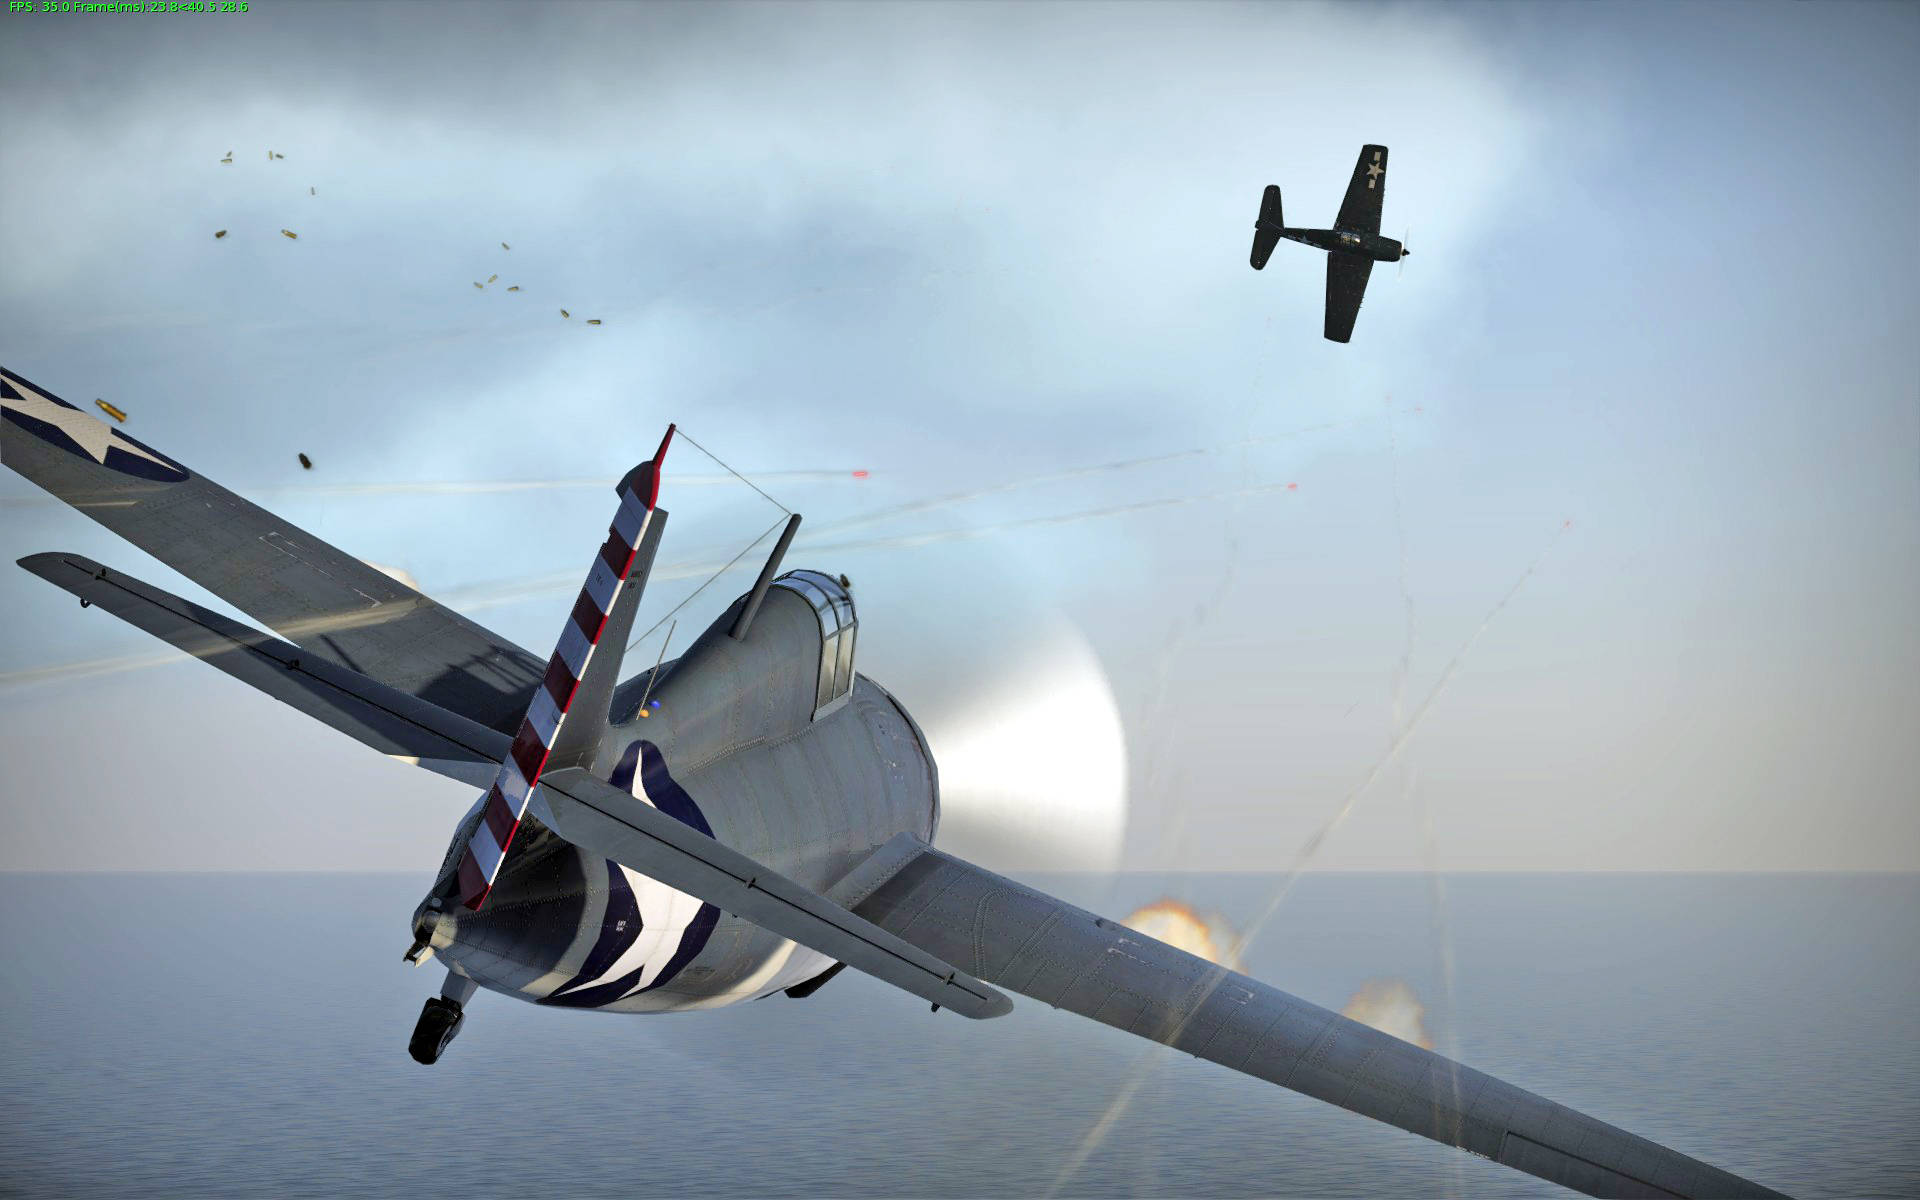 piston aircraft air combat maneuvers